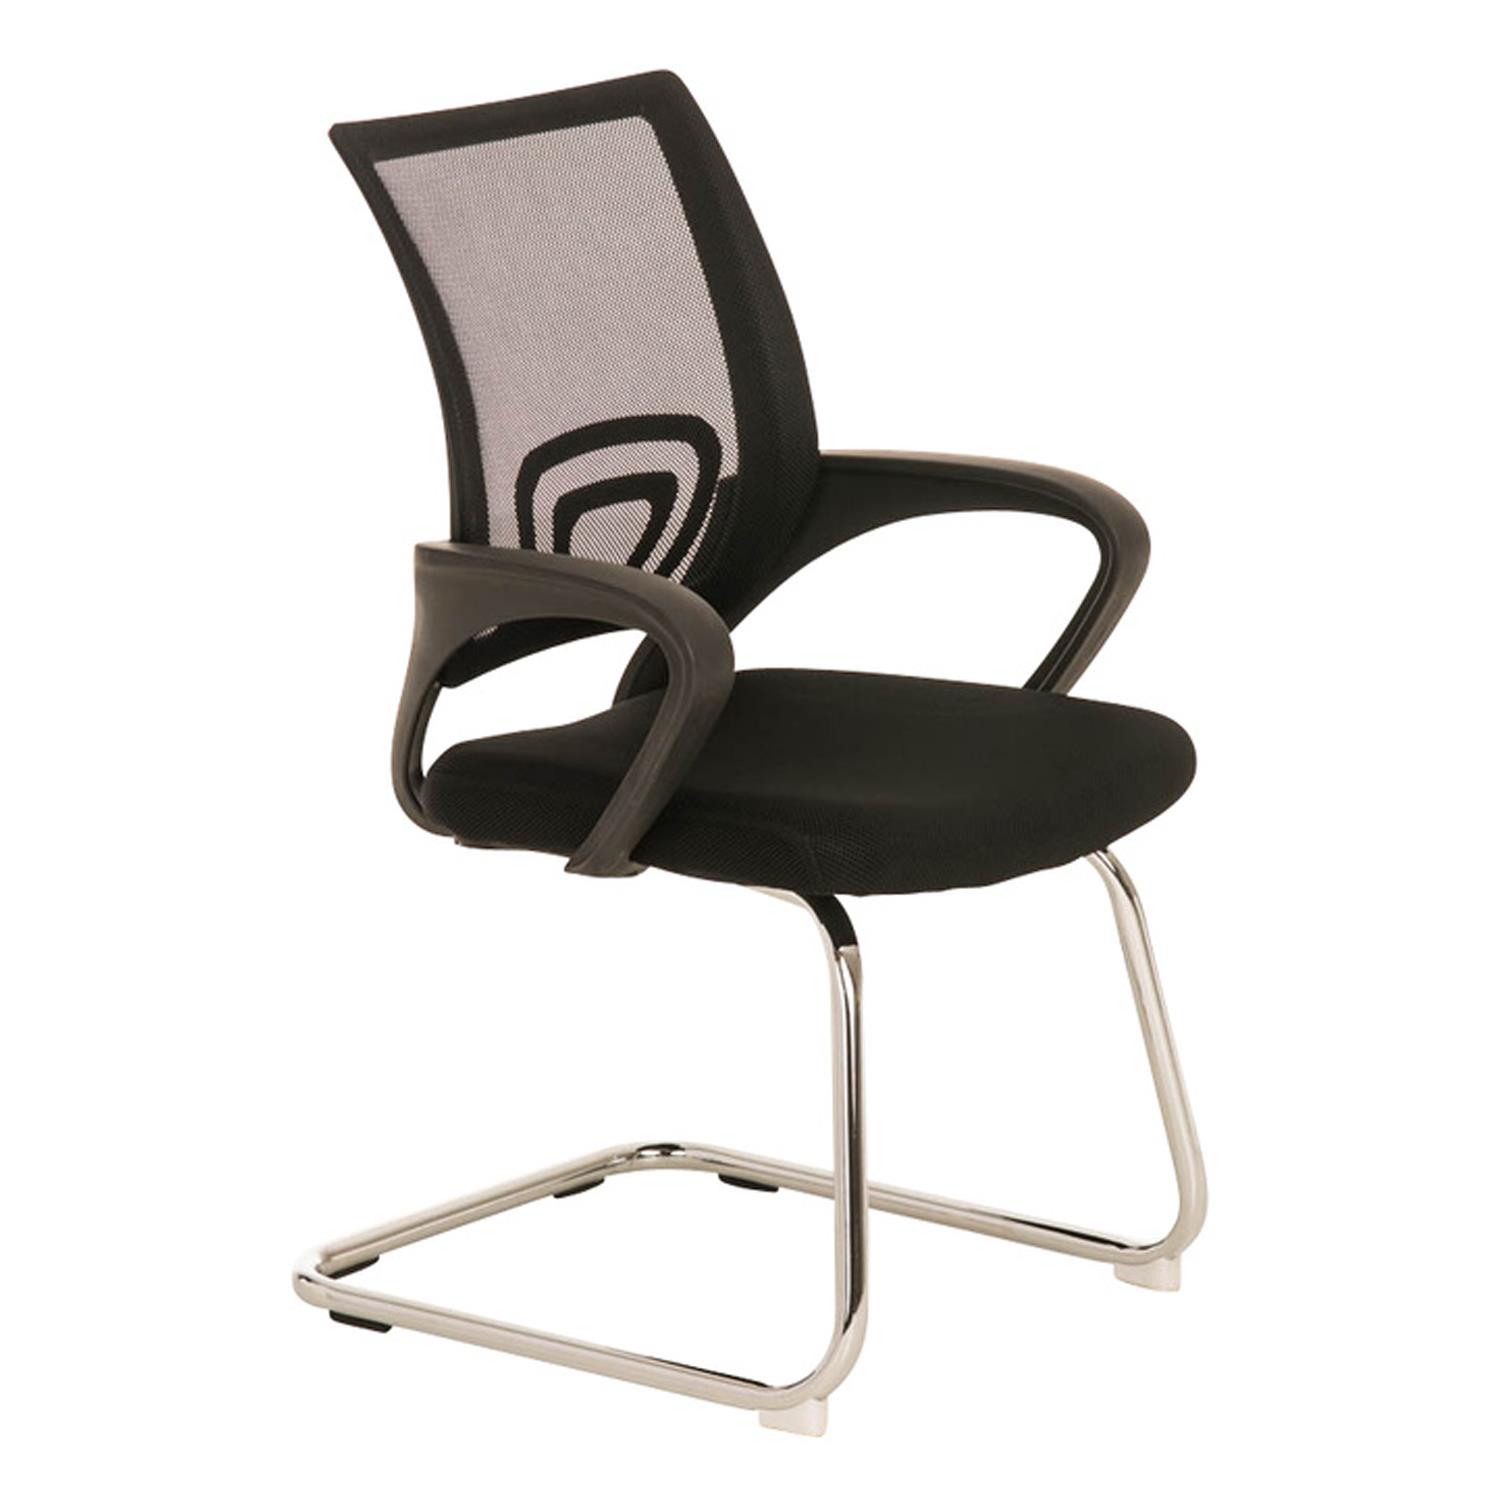 Cadeira de Visita SEUL V, Design Atractivo, Assento Acolchoado, Cor Preto